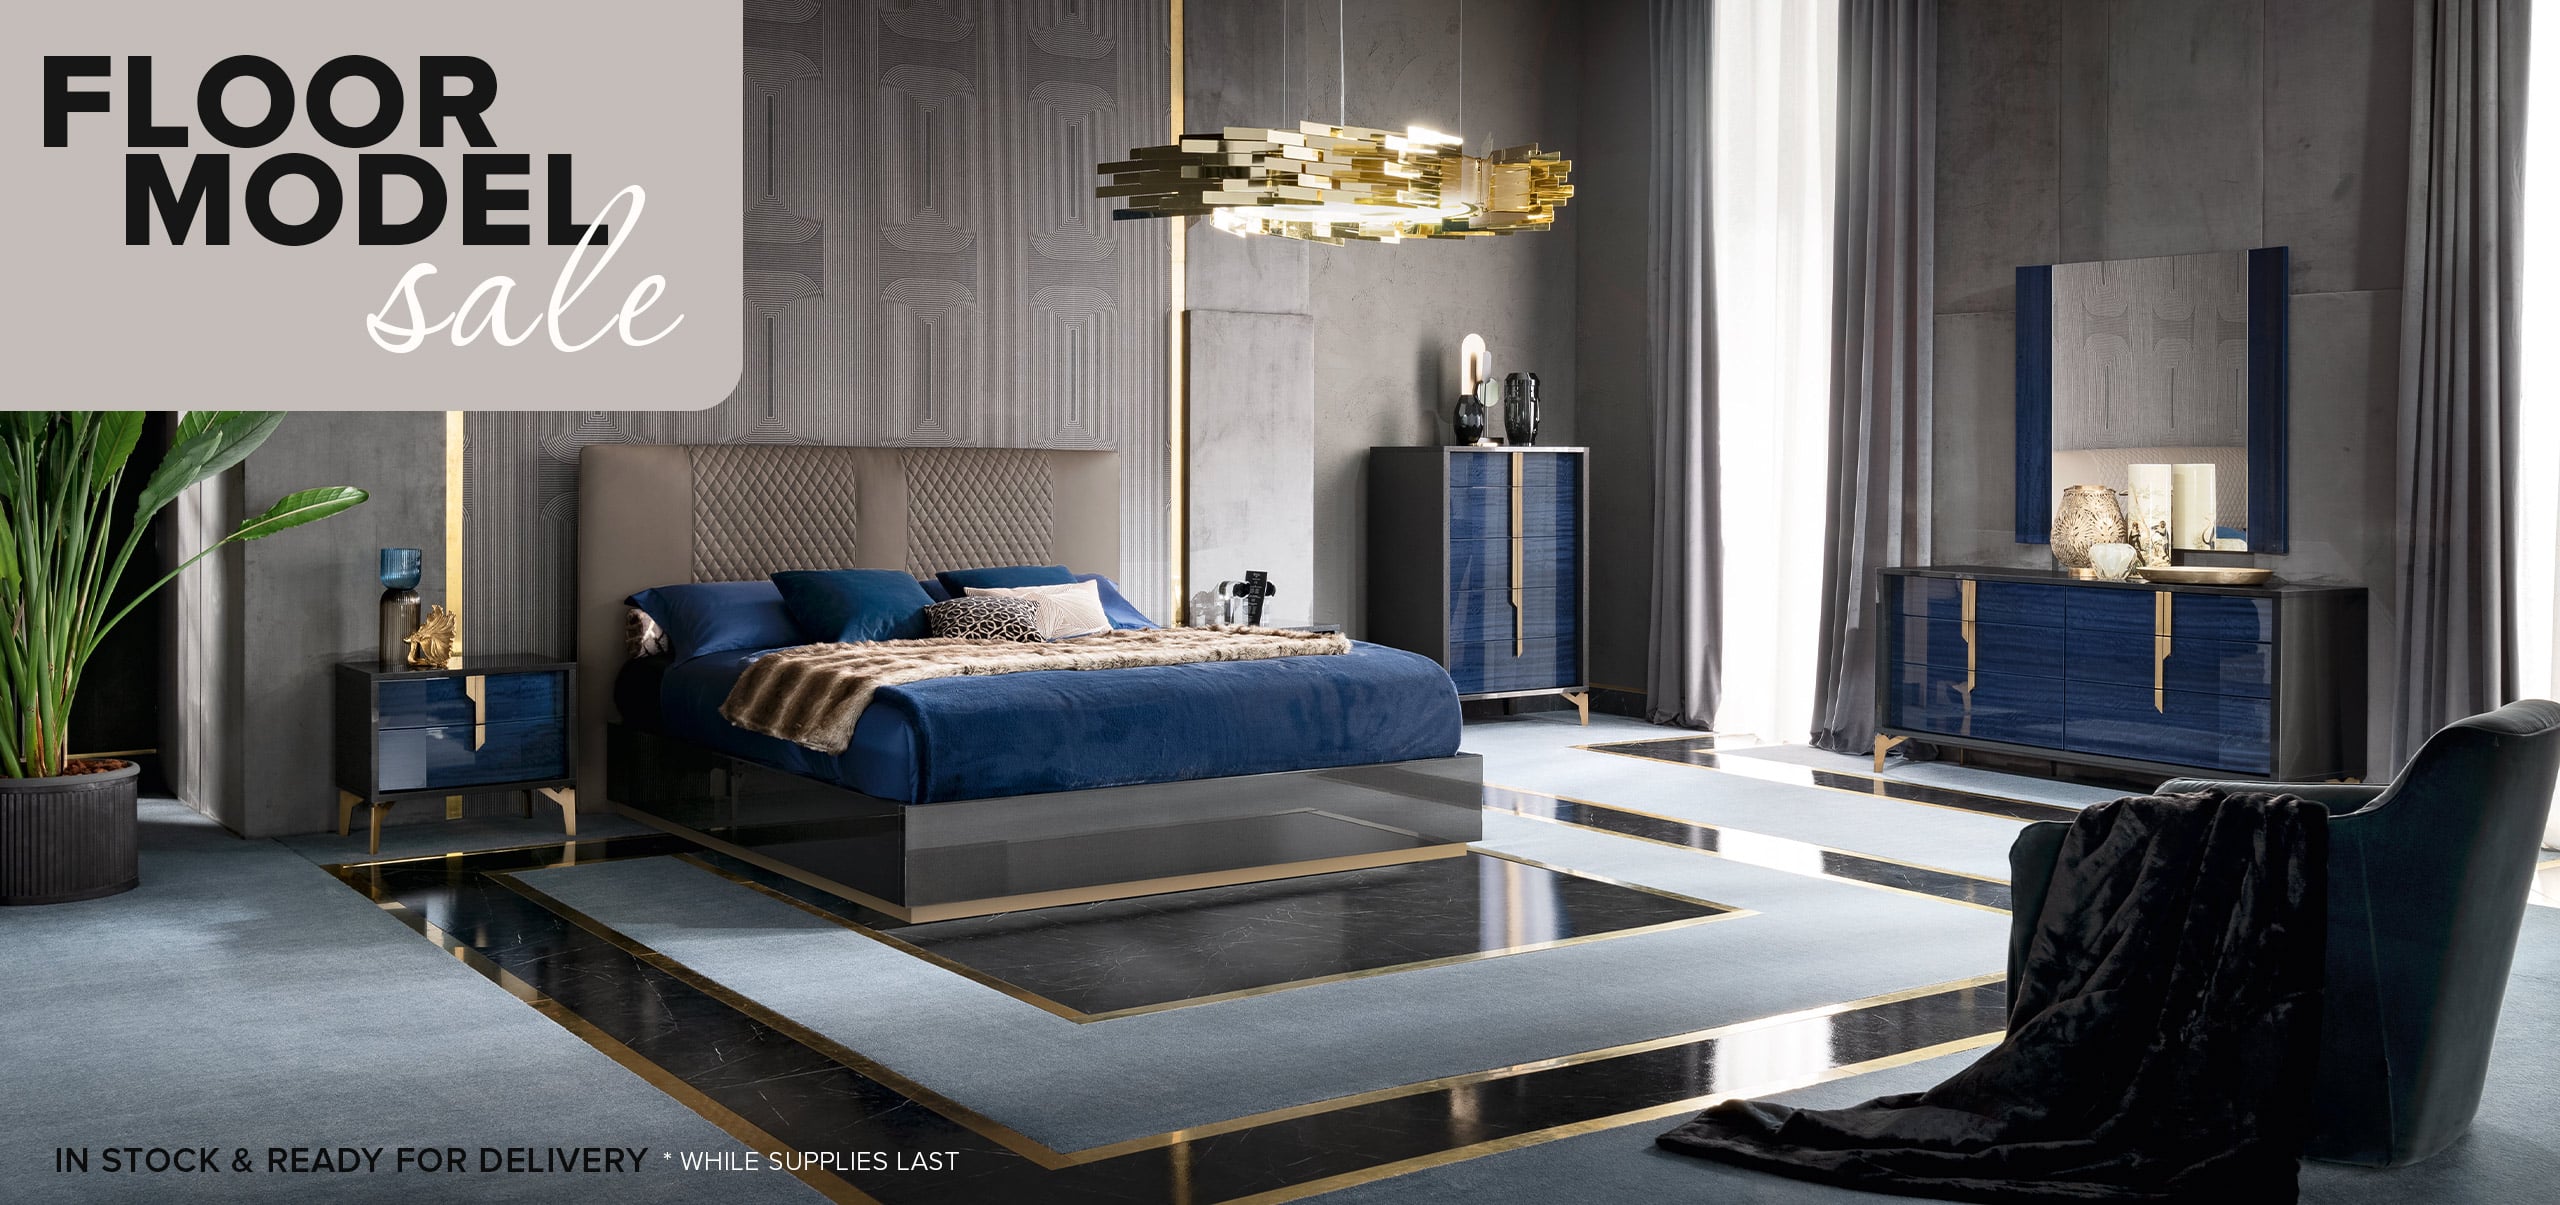 Oceanum Bedroom Set by Alf Italia - Floor Model Sale at Furnitalia